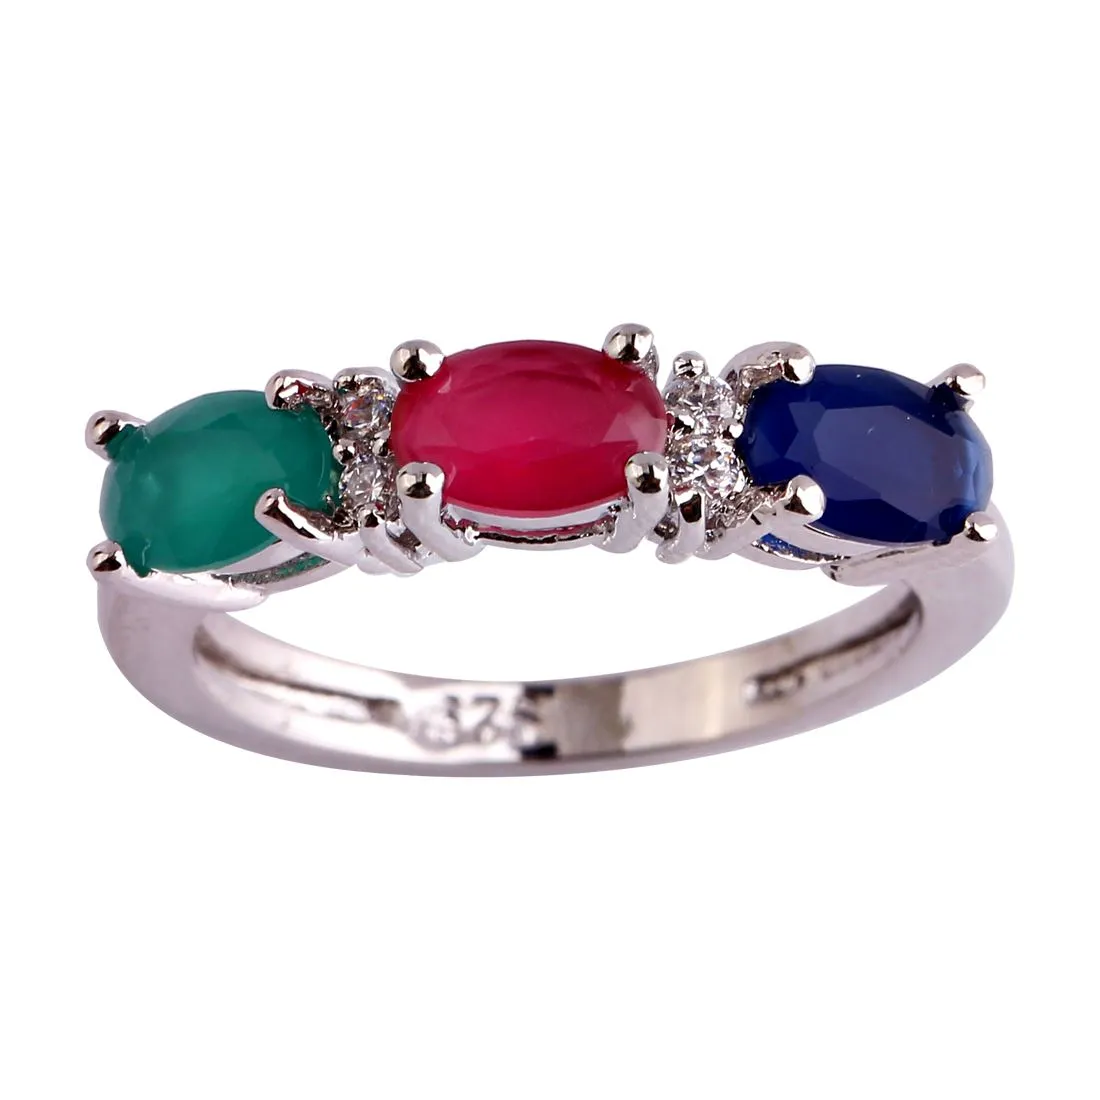 Jewelry Lab Ruby Emerald Sapphire 18K Oro blanco plateado Anillo de moda de plata Tamaño 6 7 8 9 10 11 12 Envío gratis al por mayor